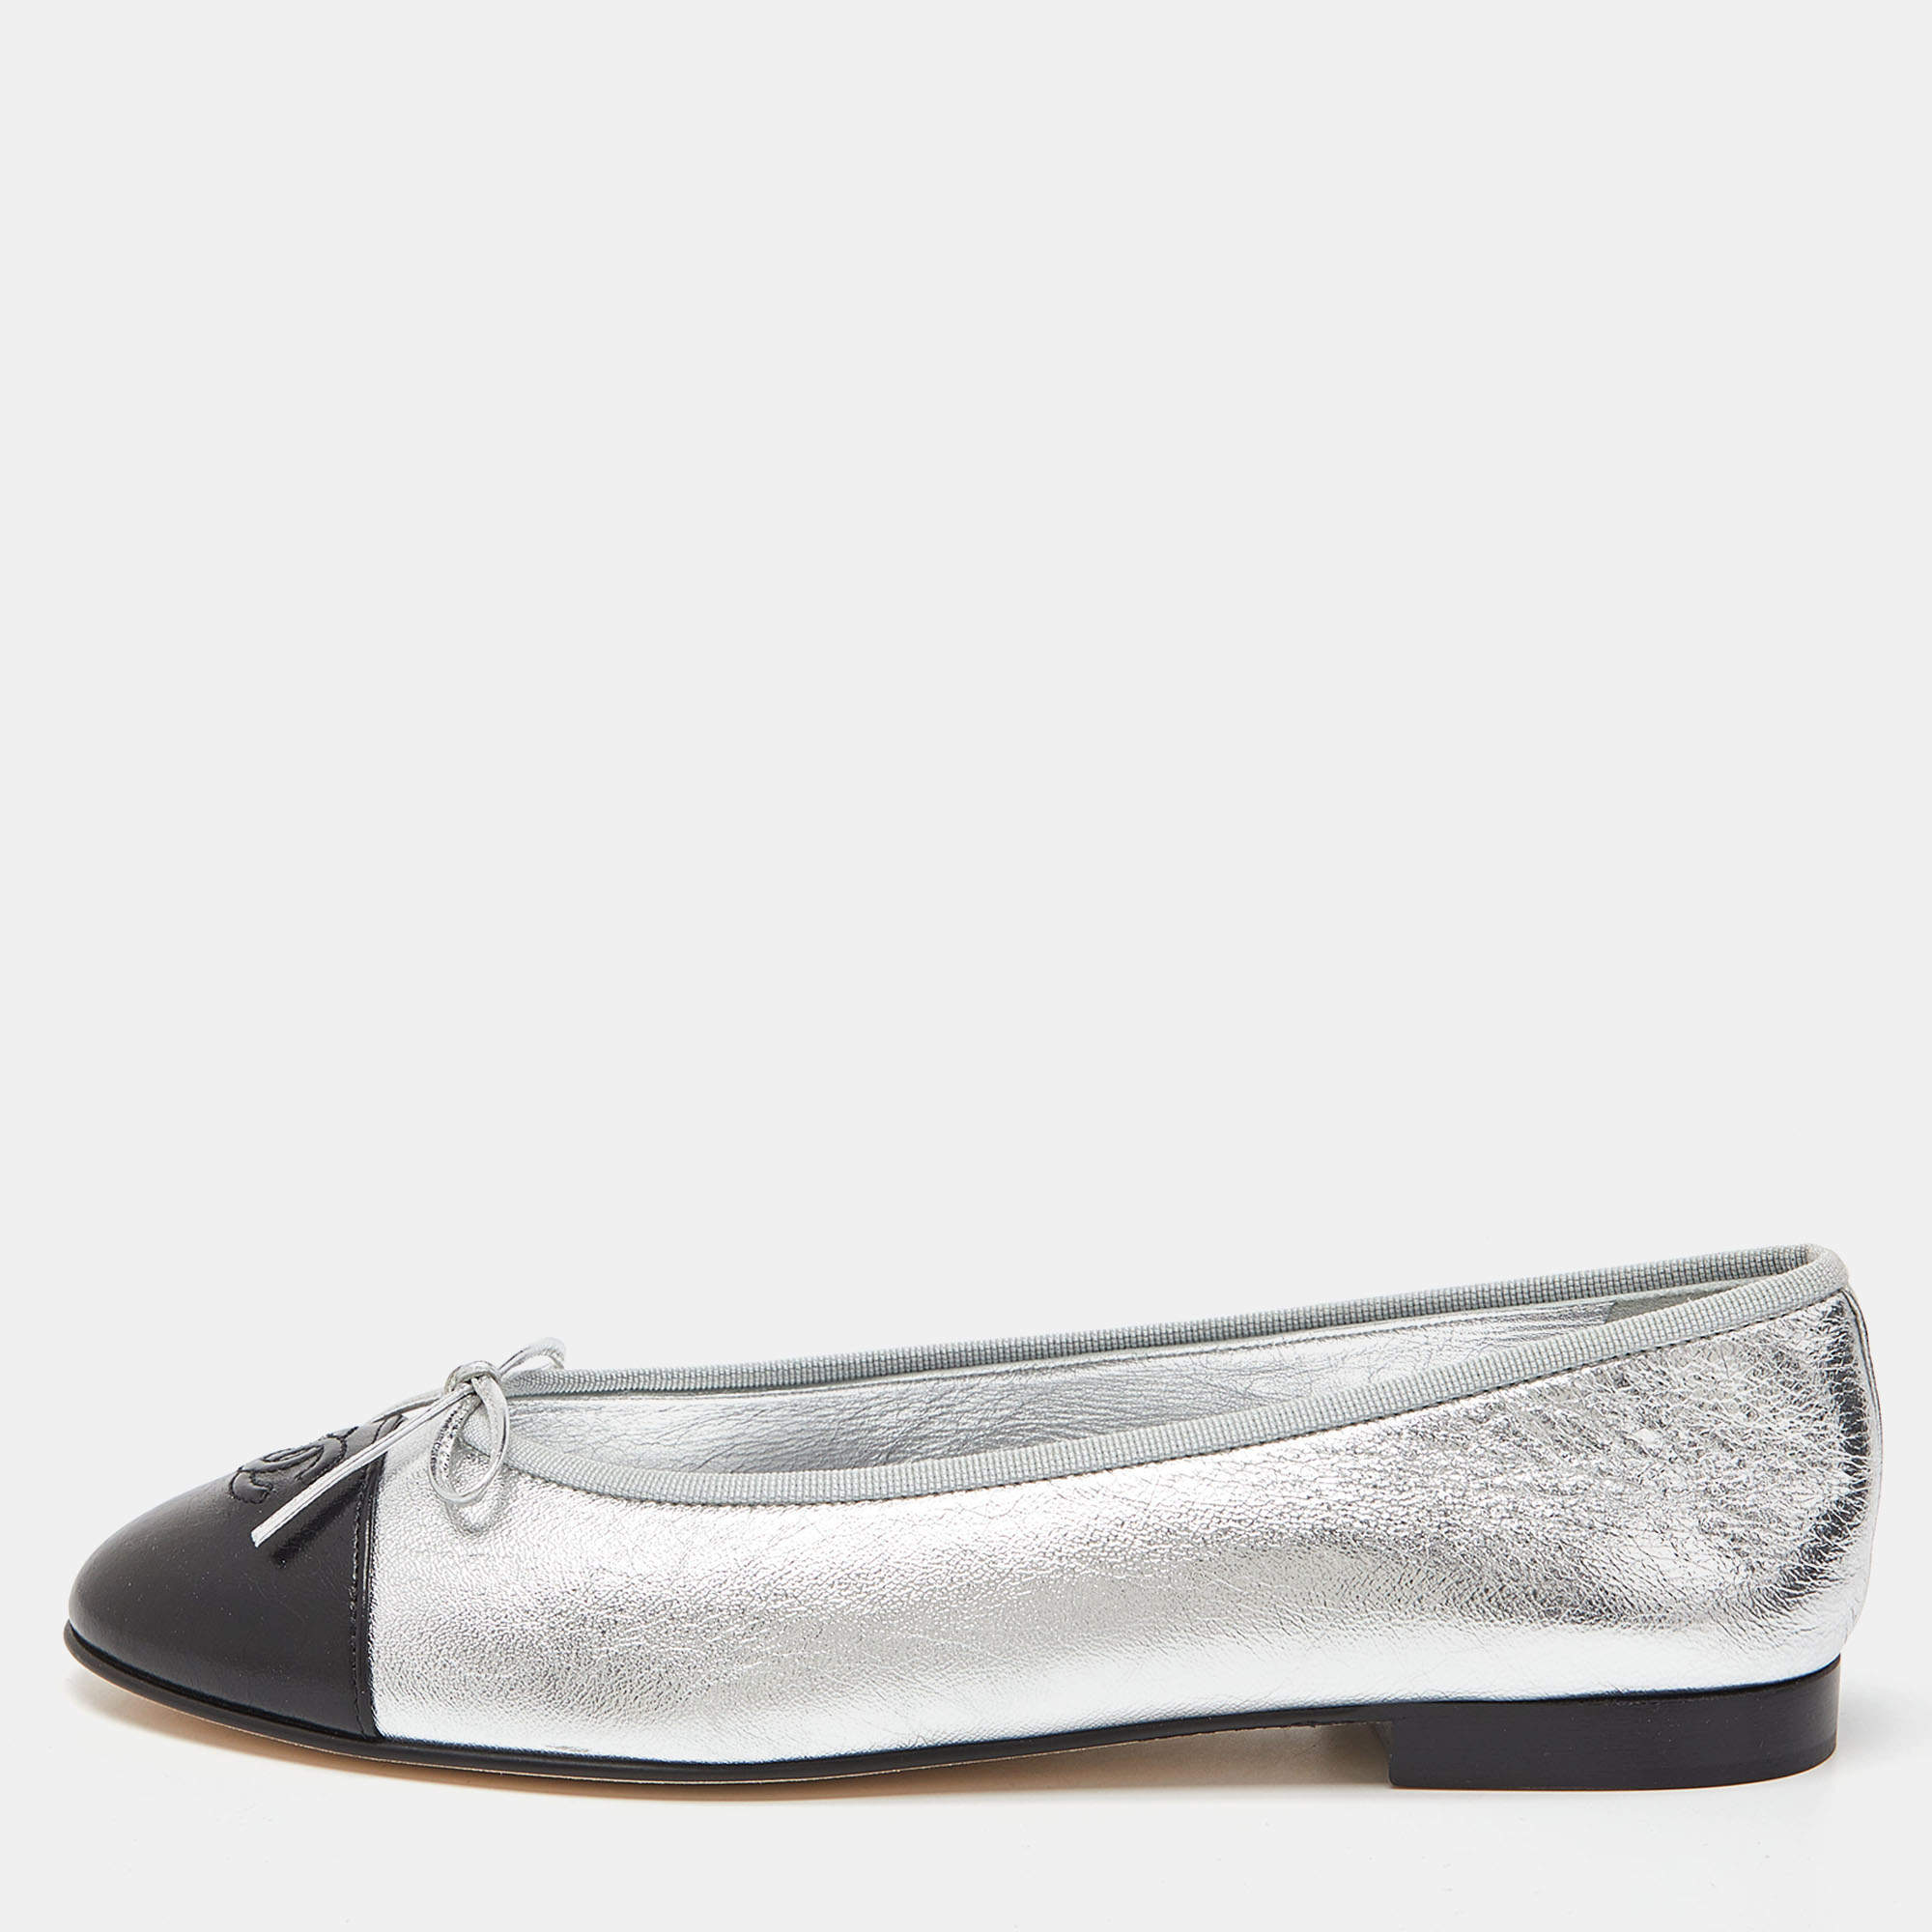 Chanel Metallic Silver/Black Leather CC Bow Cap Toe Ballet Flats Size 41.5